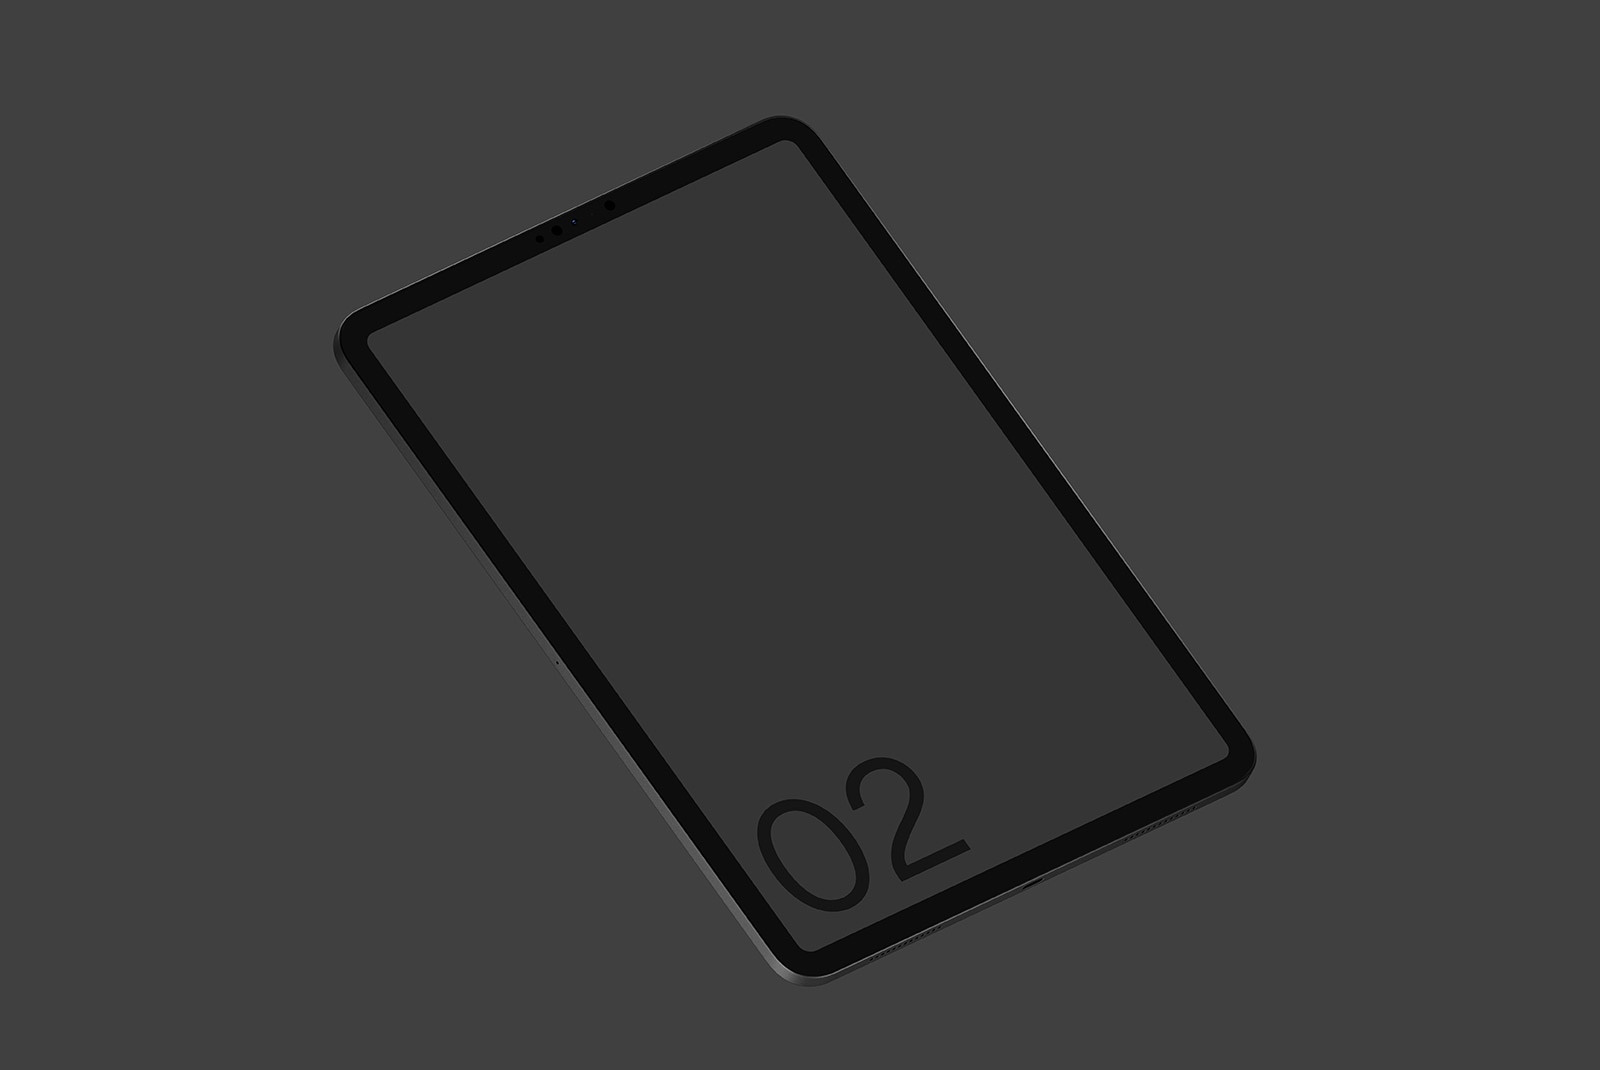 Minimalist tablet mockup with shadows on a dark grey background, ideal for modern UI/UX design presentation and portfolio display.